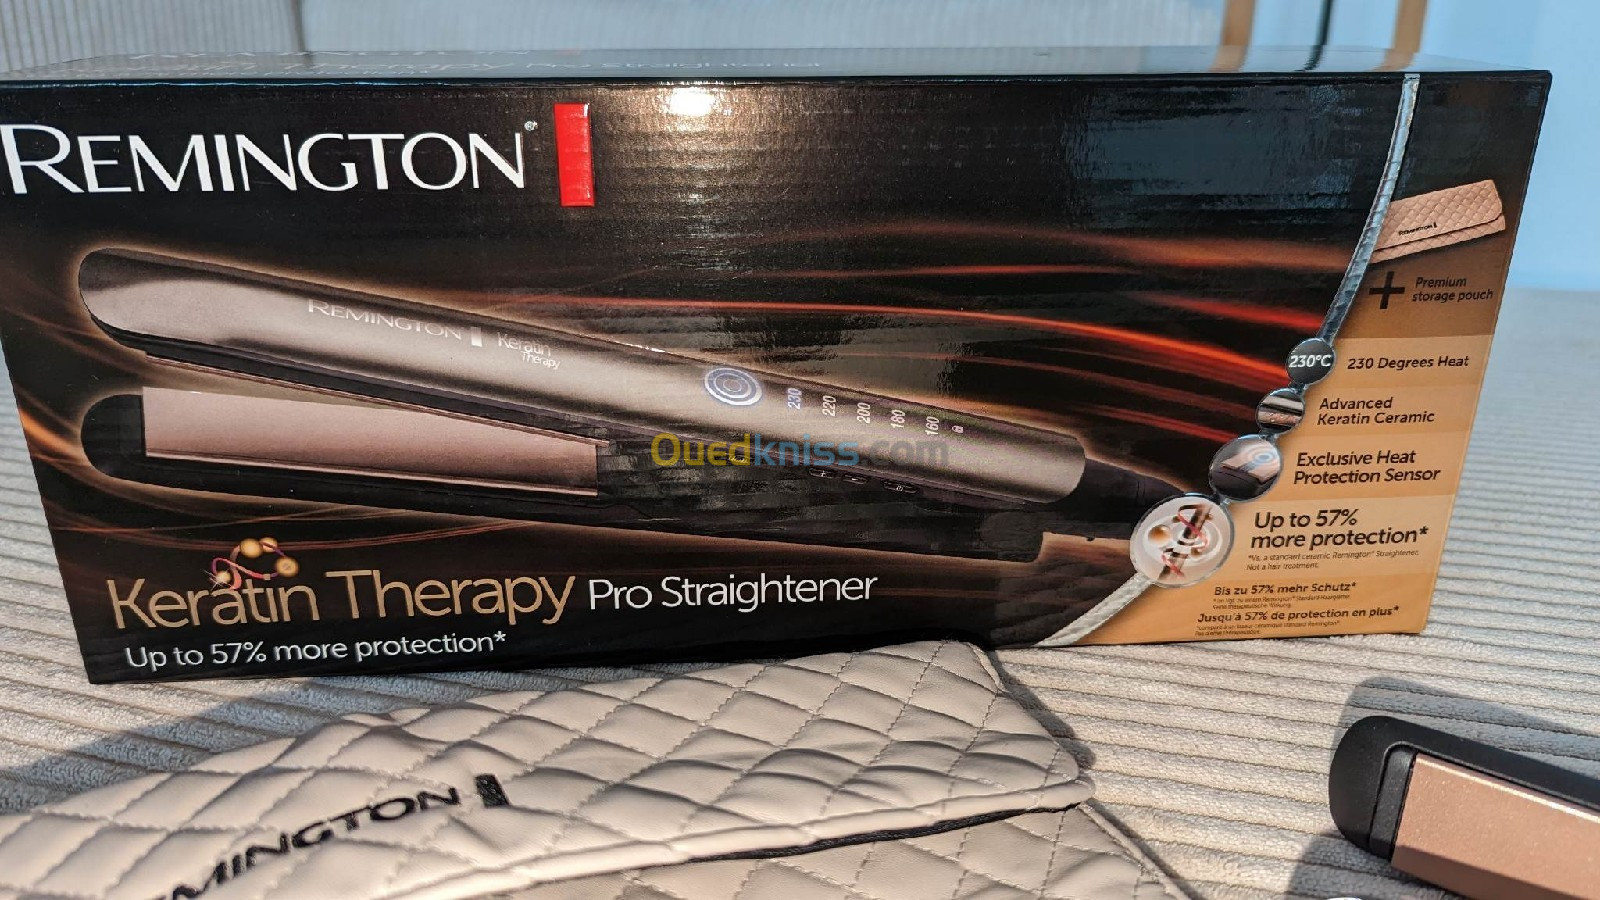 Remington Lisseur kératine therapy pro straightener 